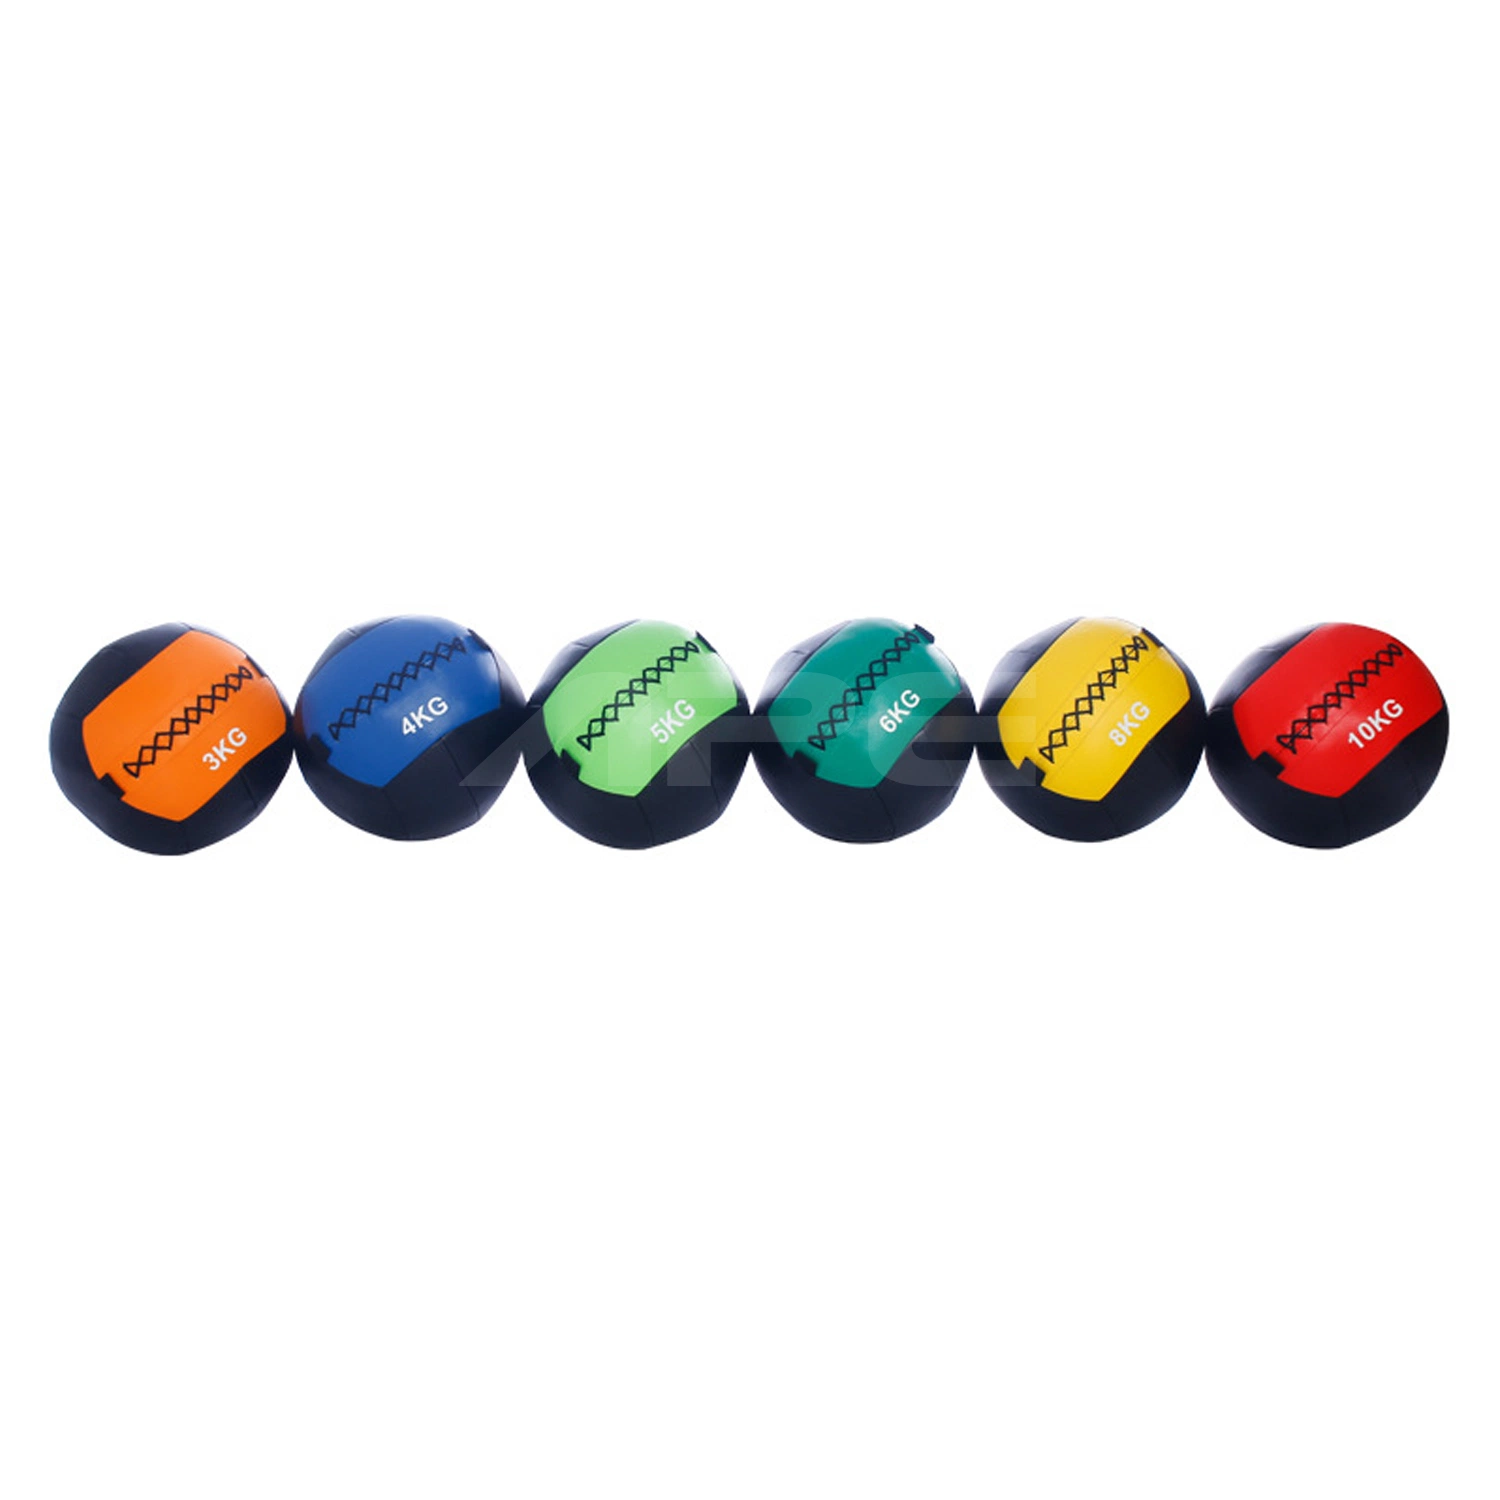 Ape High quality/High cost performance  Wall Balls Fitness Gym Equipment Soft Medicine Balls